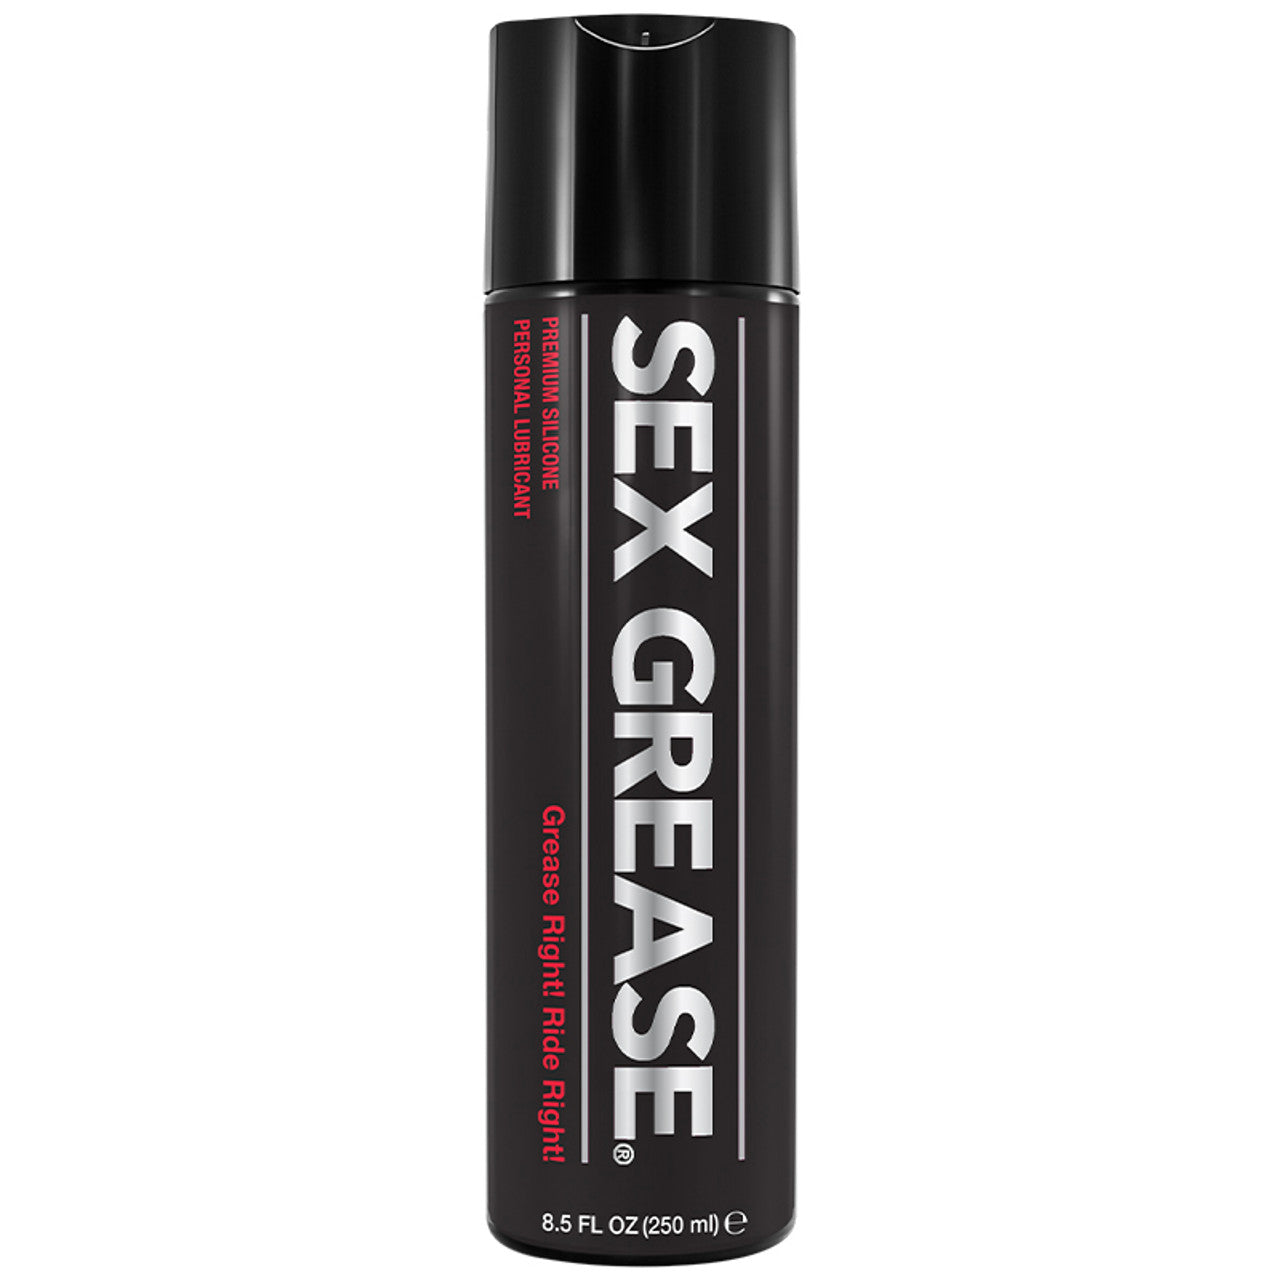 Sex Grease Premium • Silicone Lubricant